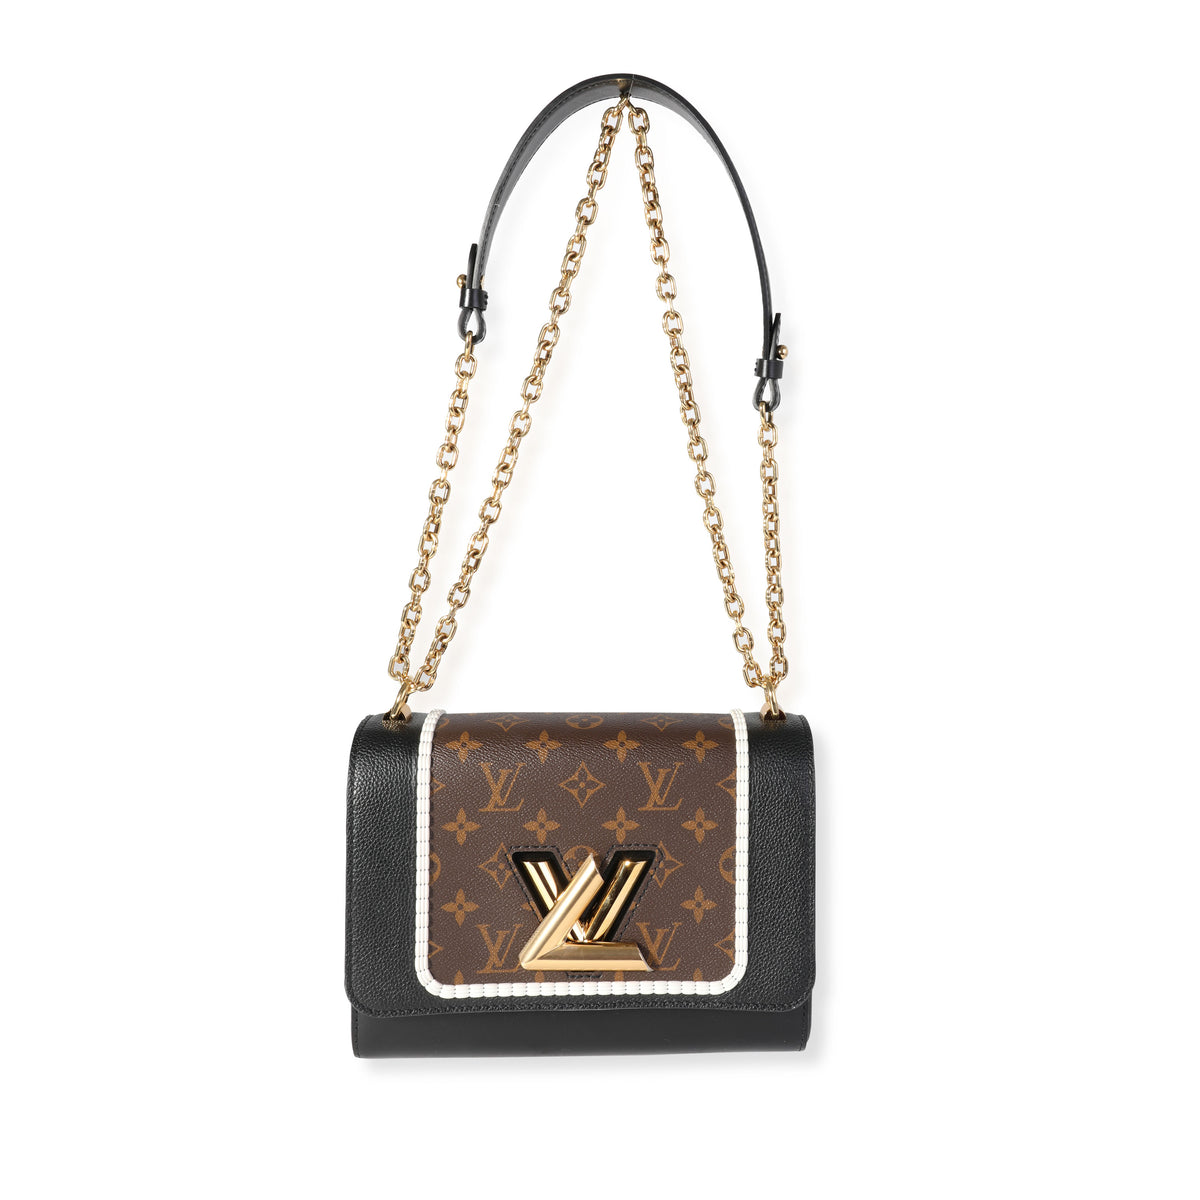 Leather handbag Louis Vuitton Black in Leather - 30715237